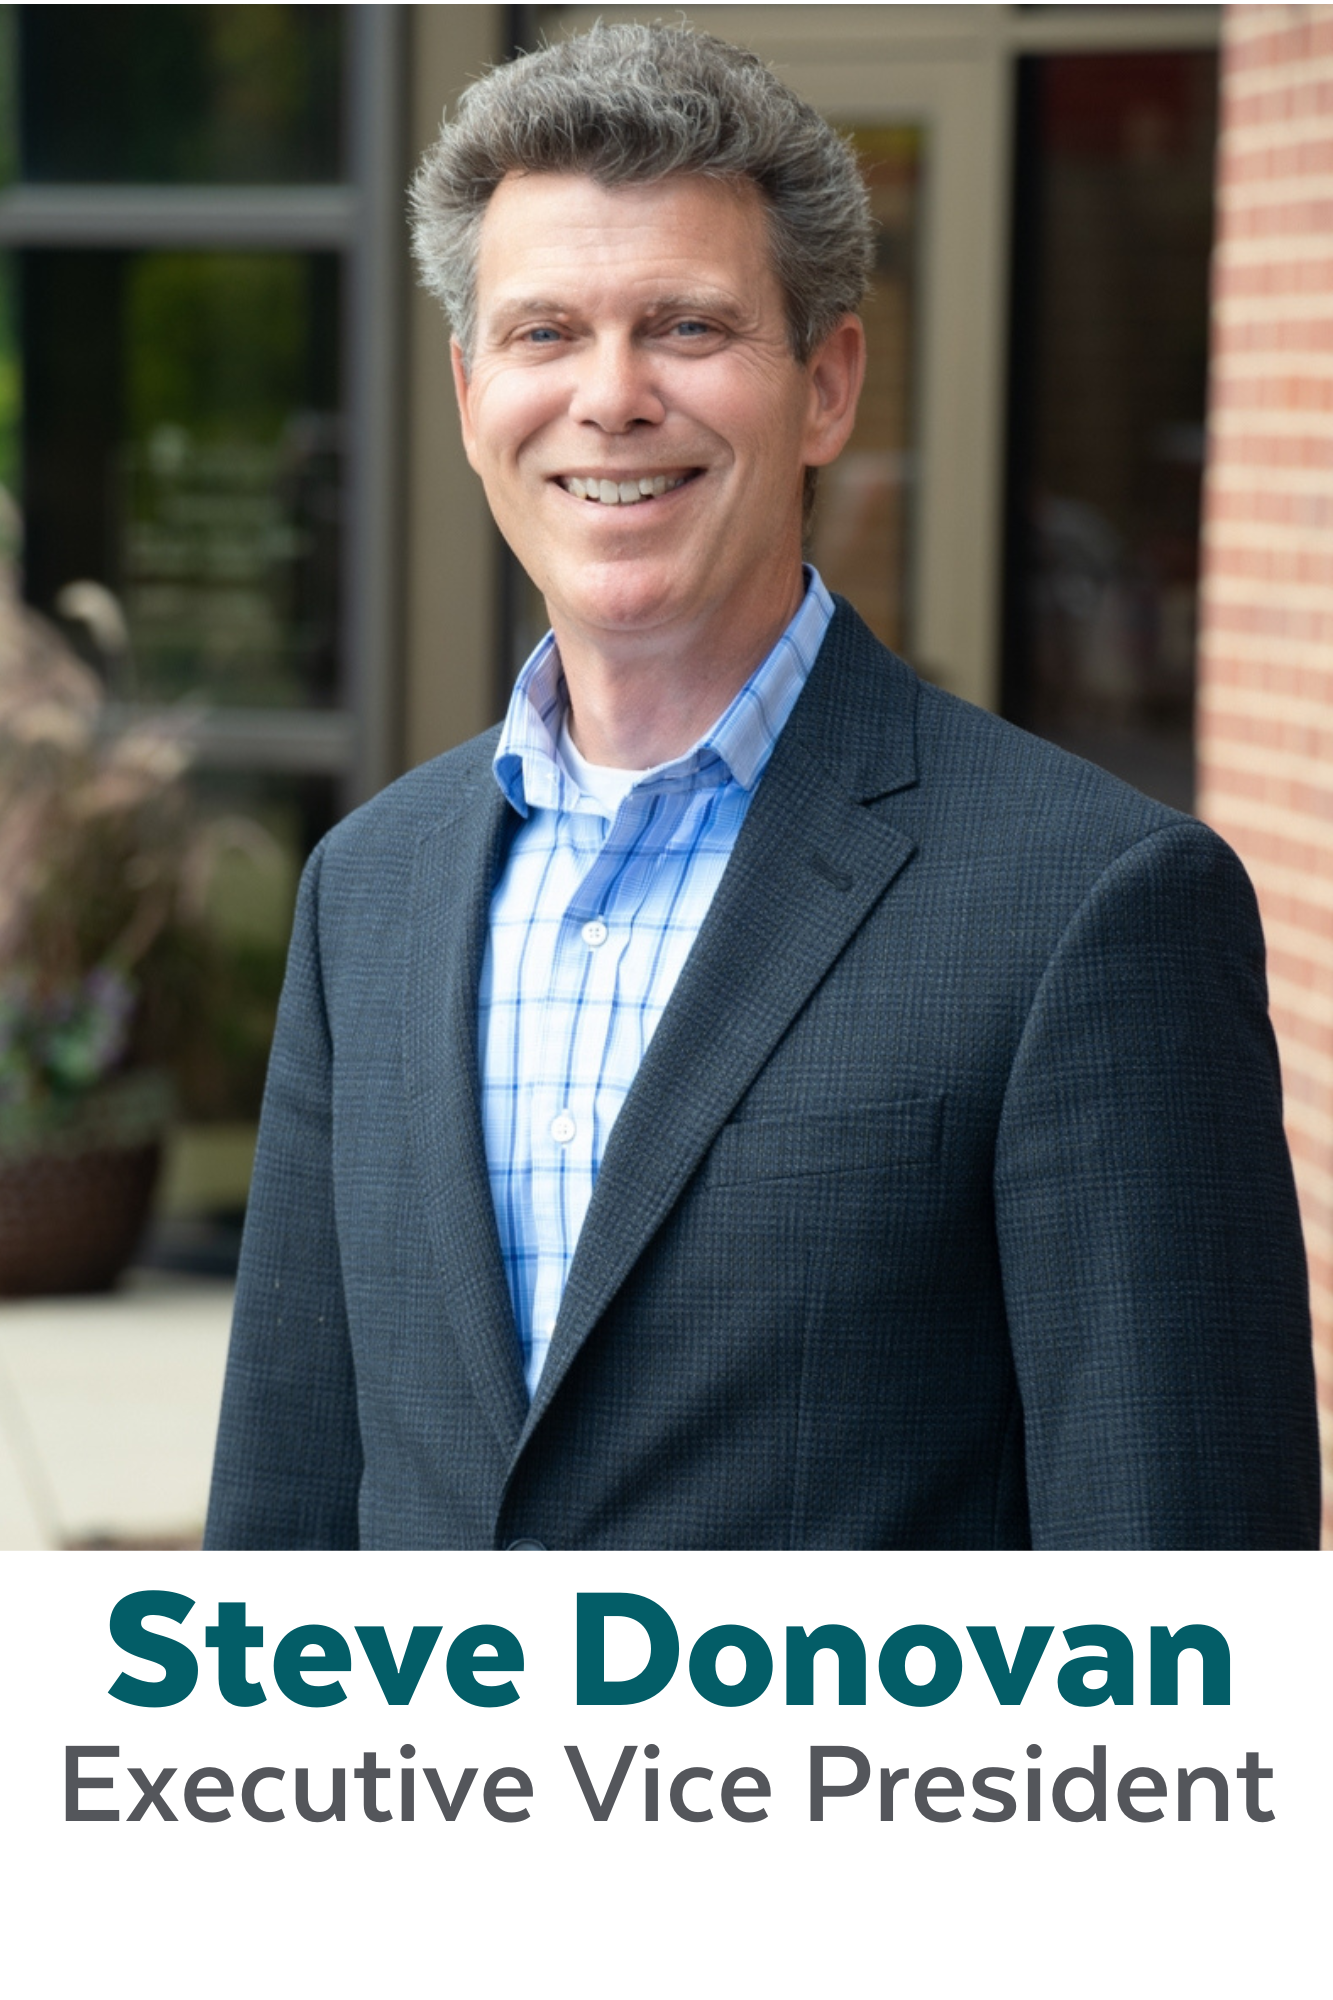 Steve Donovan